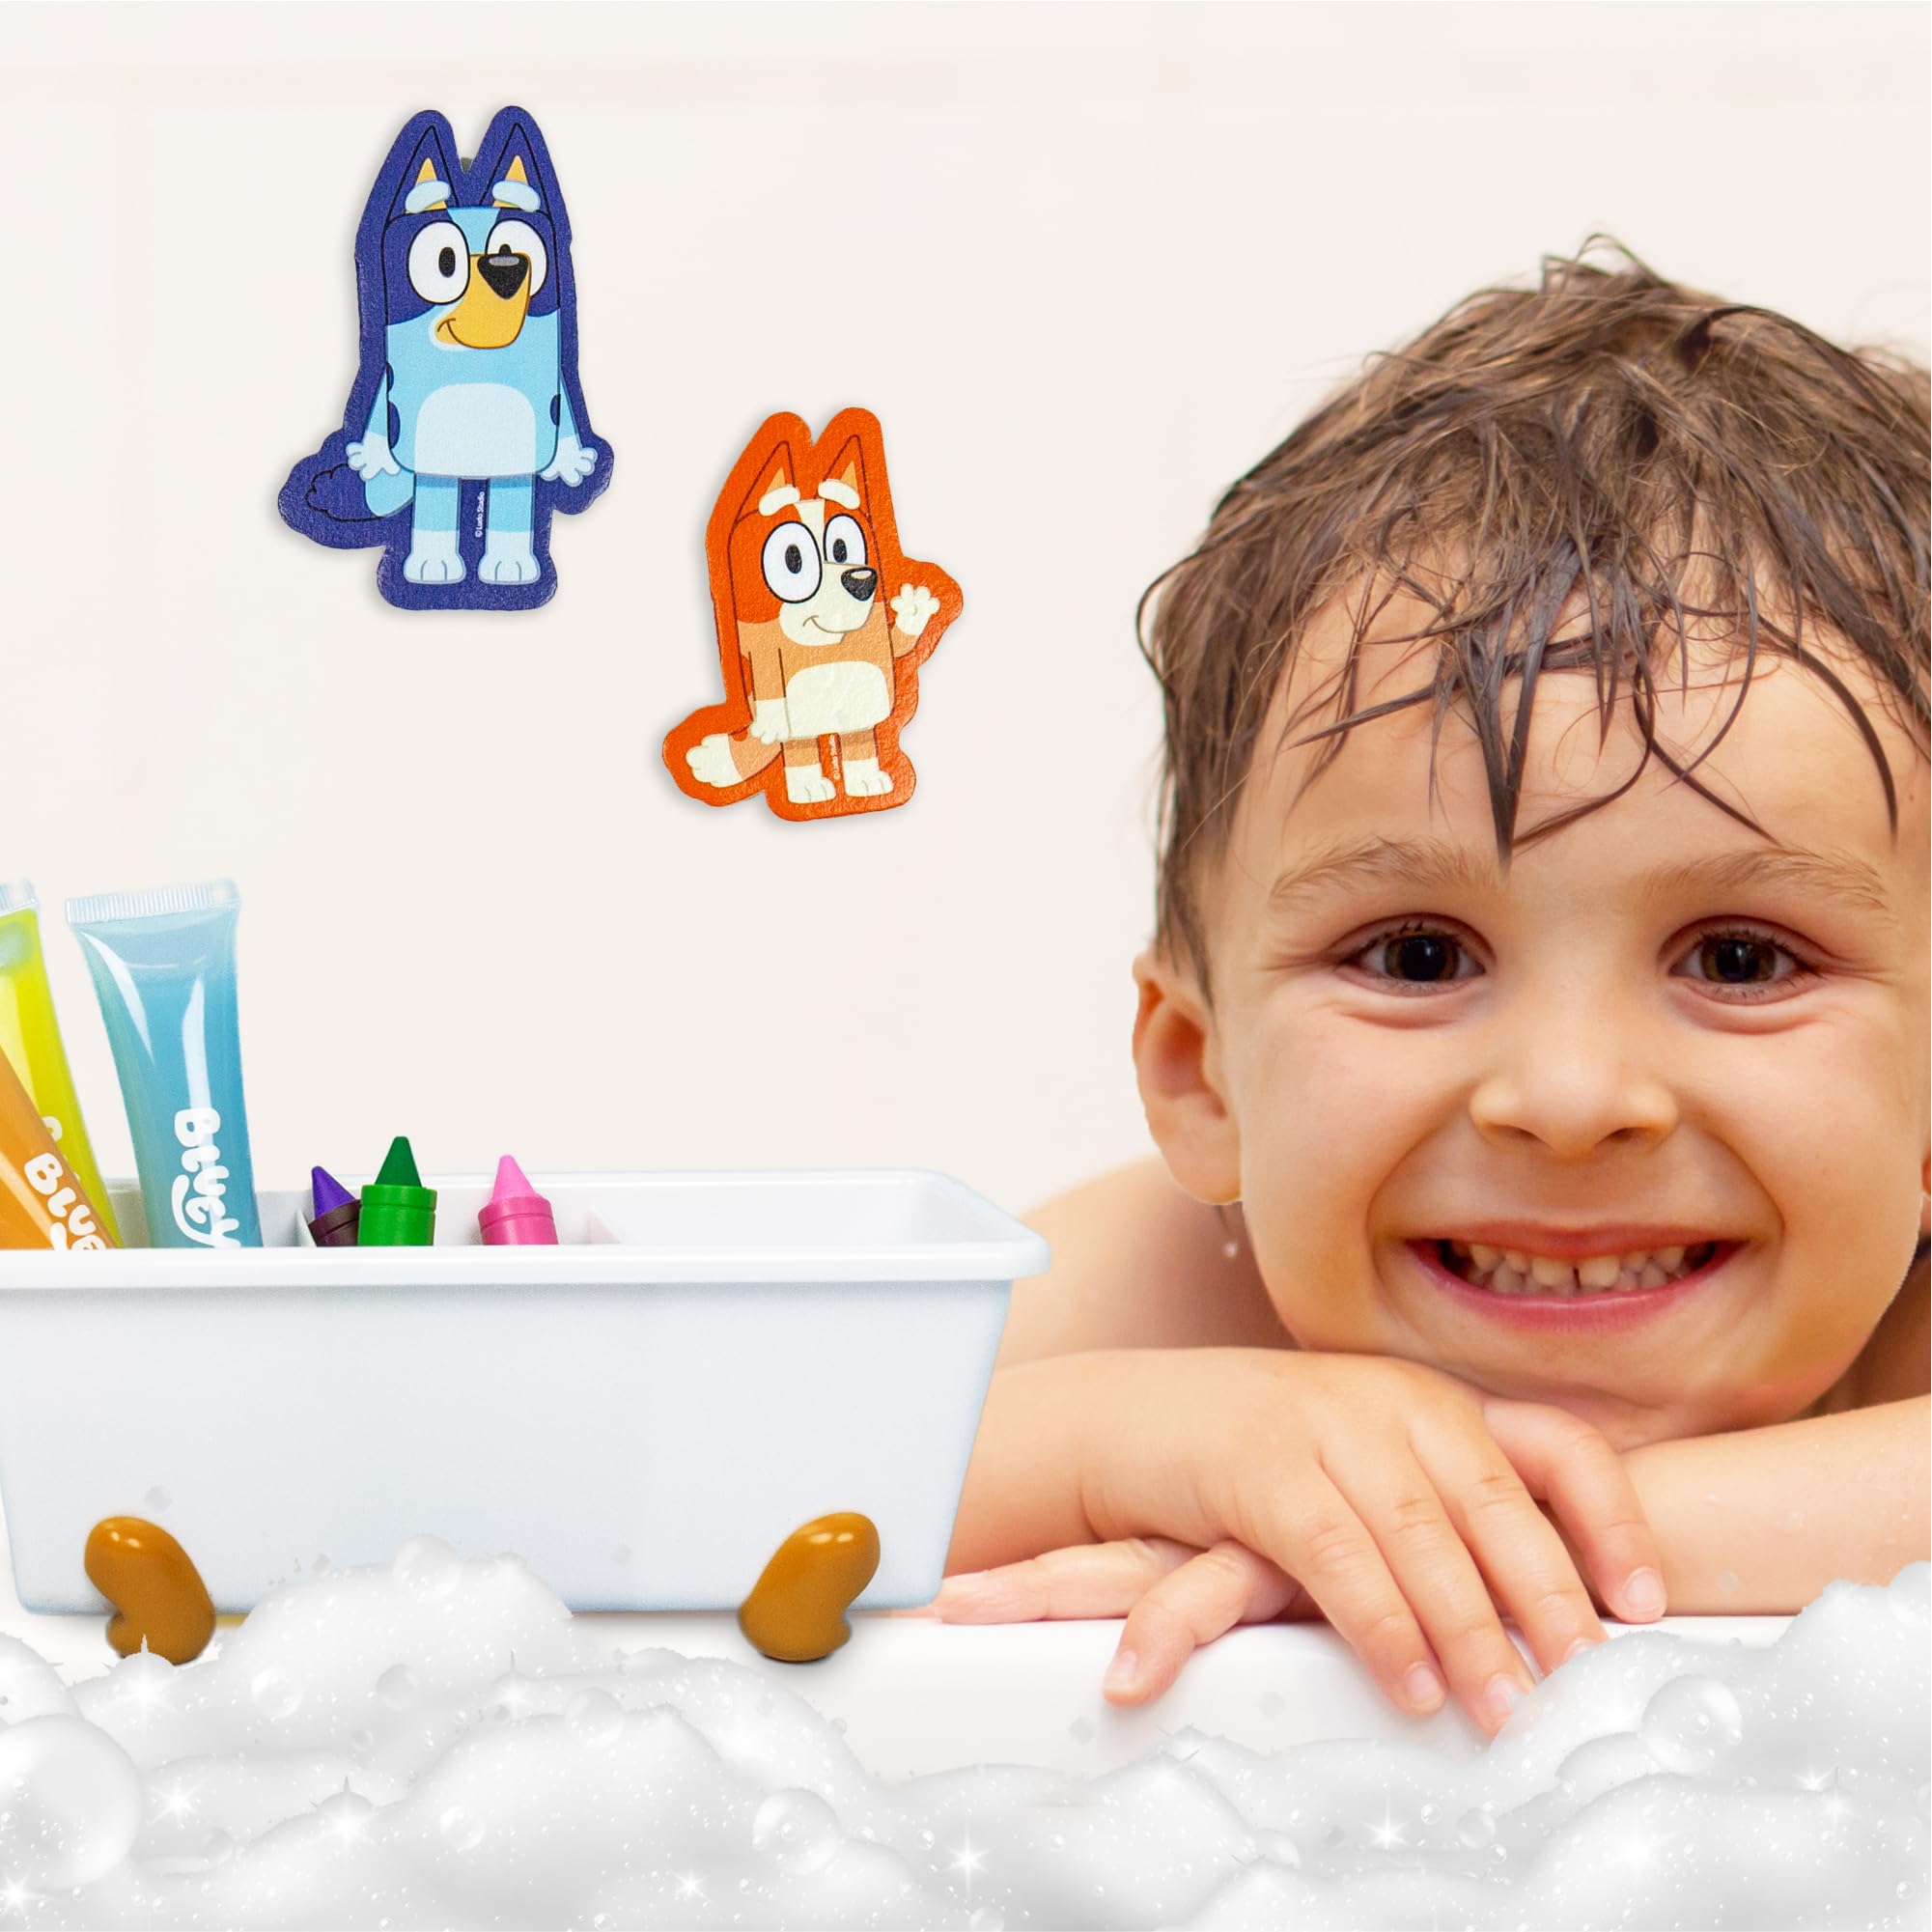 Bluey Bath Creations, 9-Piece Activity Set, Fun Bath Toys, Includes Washable Bath Paints, Bath Crayons, Bath Toy Storage, Bath Paint for Toddlers 1-3, Fun Gifts, Toddler Art Supplies